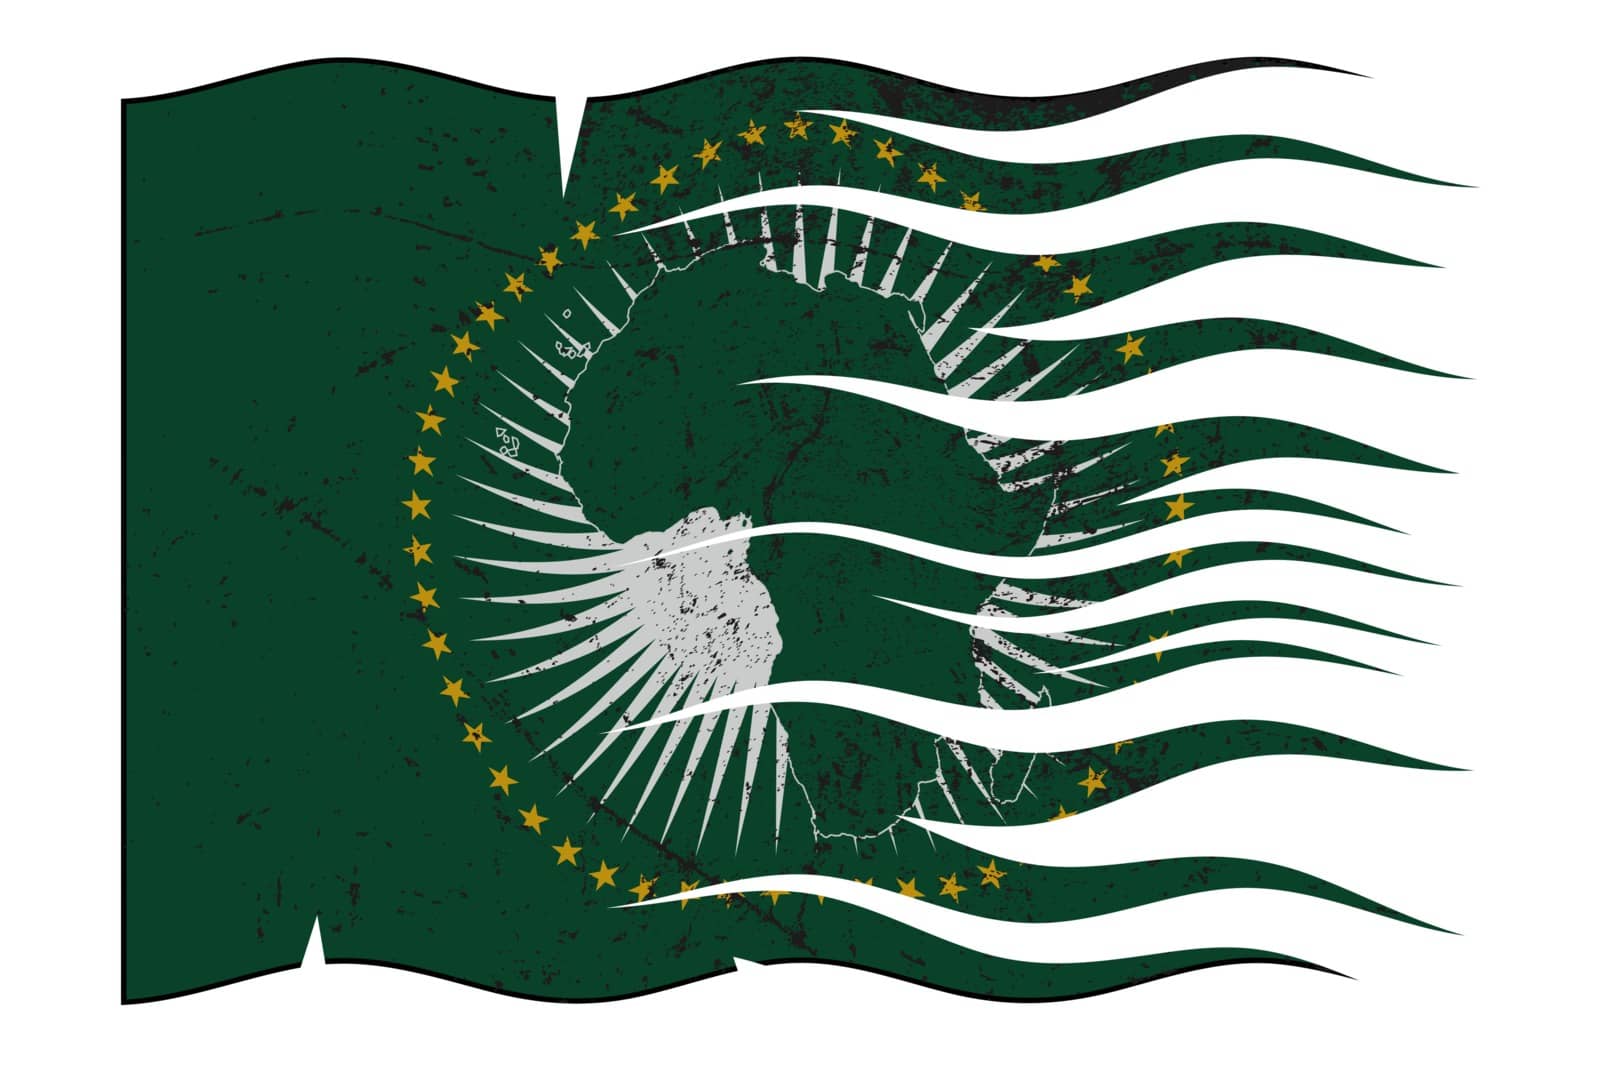 African Union Flag Wavy And Grunged by DavidScar